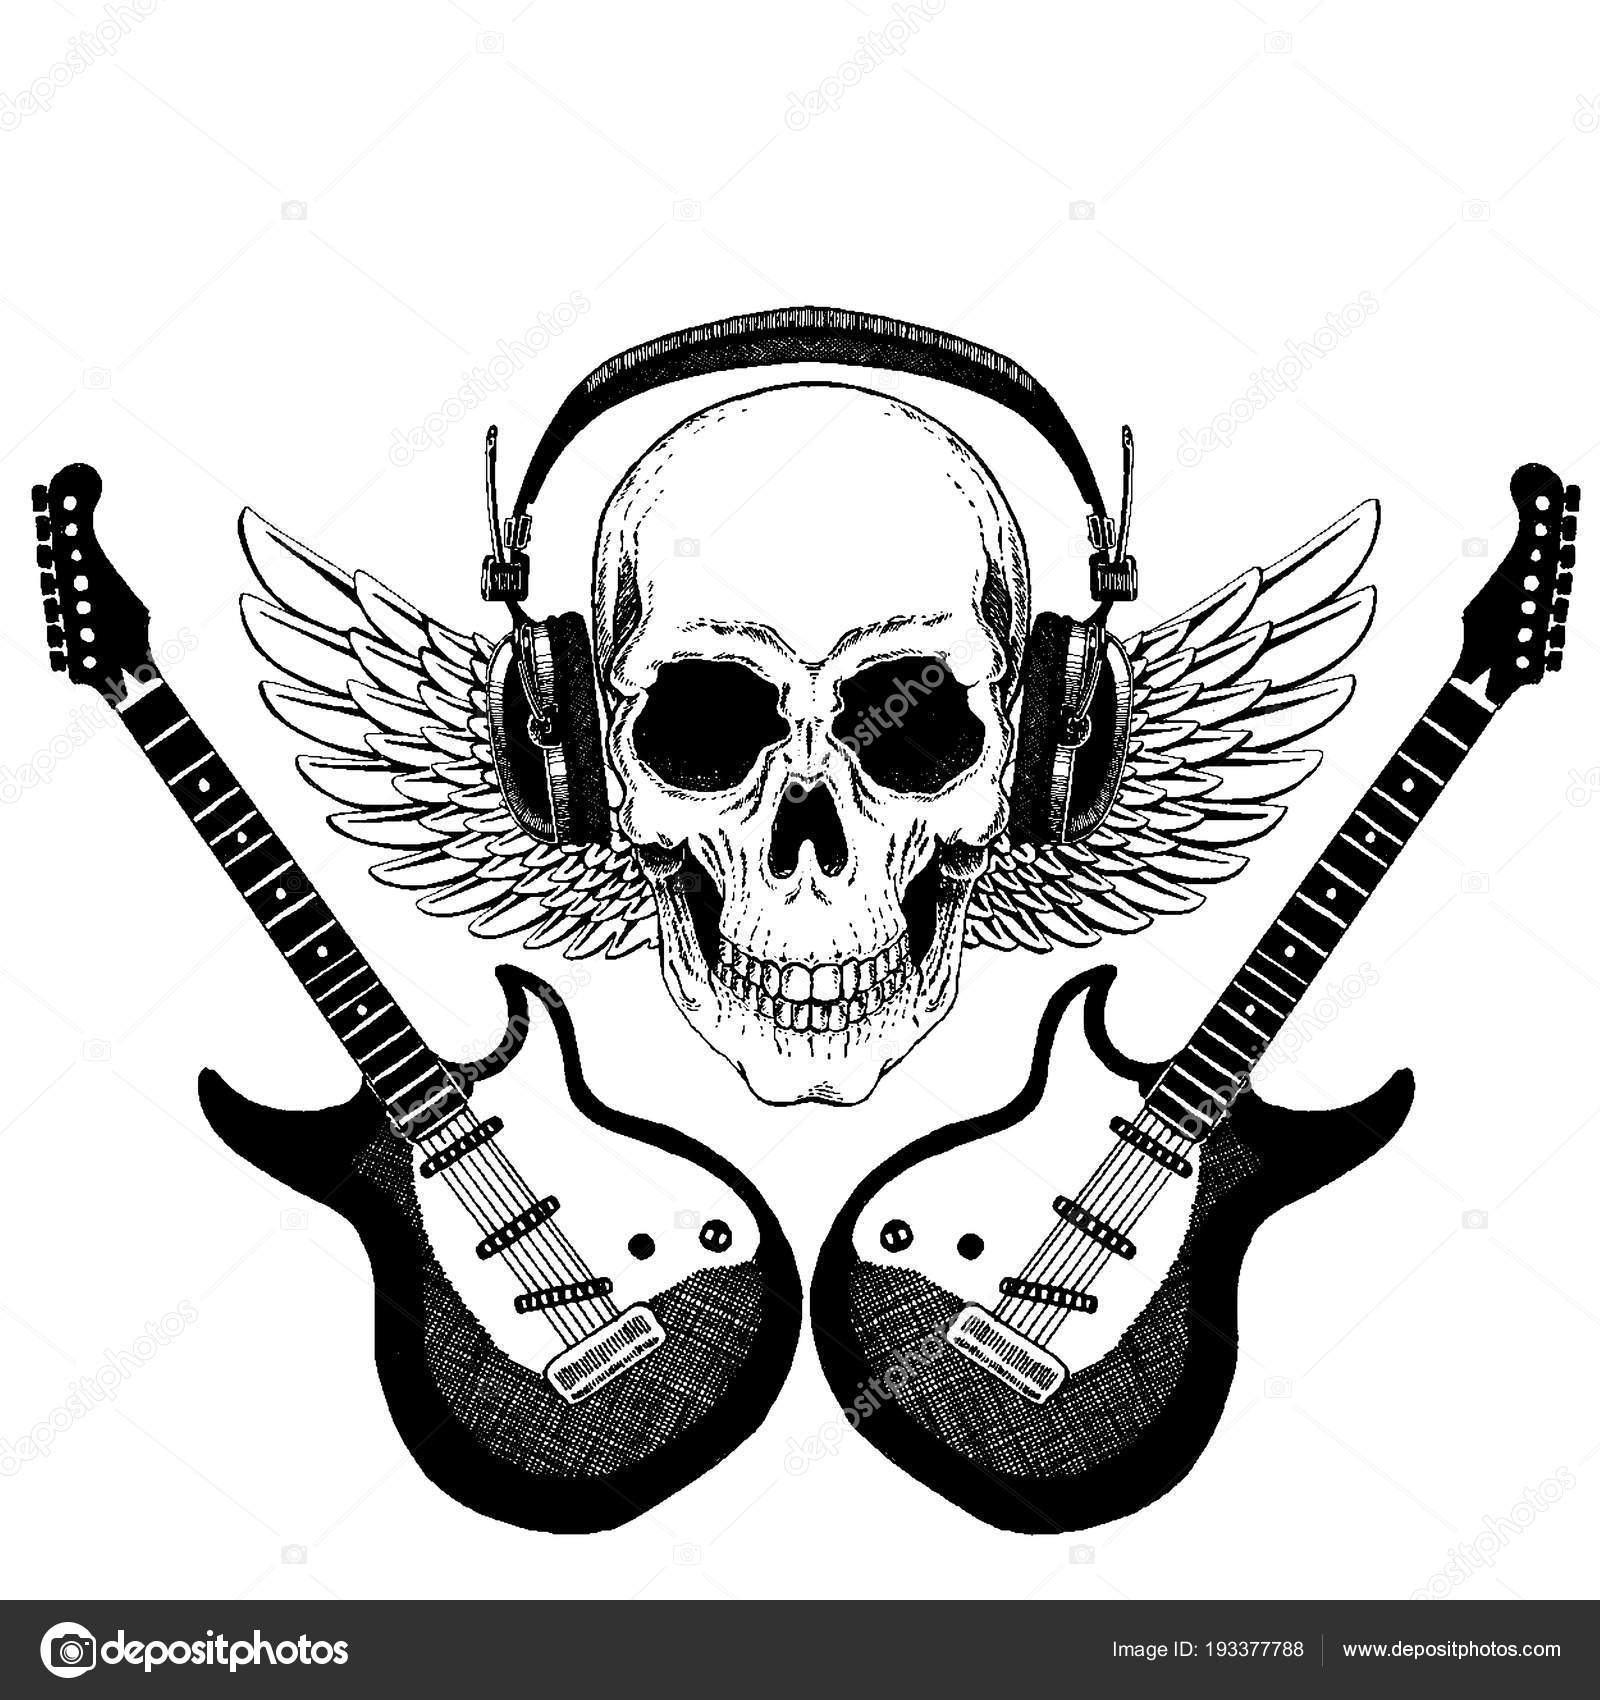 Cool vector rock music skull with headphones for t-shirt, emblem, logo ...